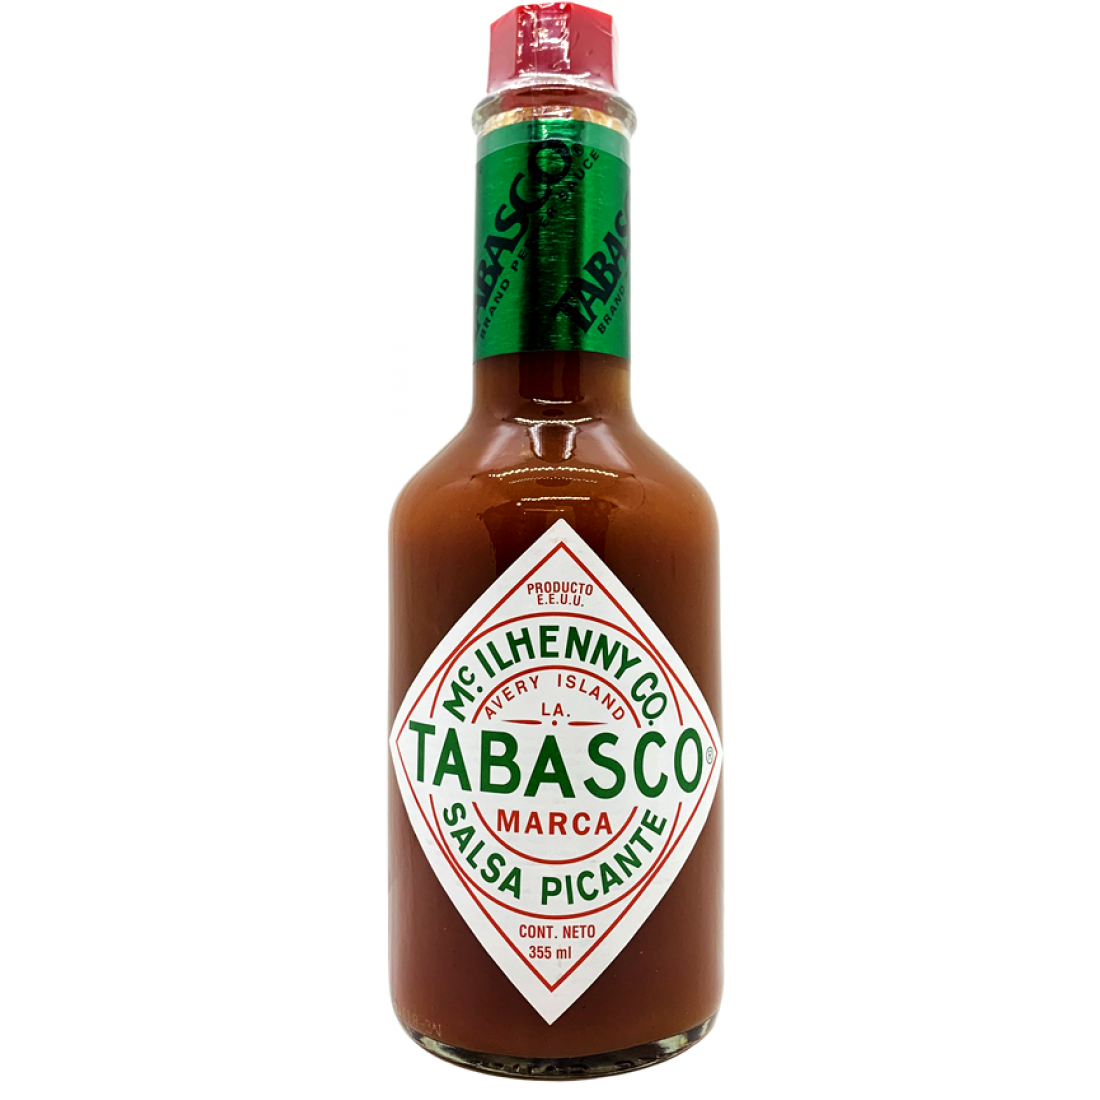 Pepper sauce. Табаско Пеппер соус 60 ml. Tabasco 3 мл. Tabasco "красный перечный". Соус Табаско острый красный перечный 60мл.